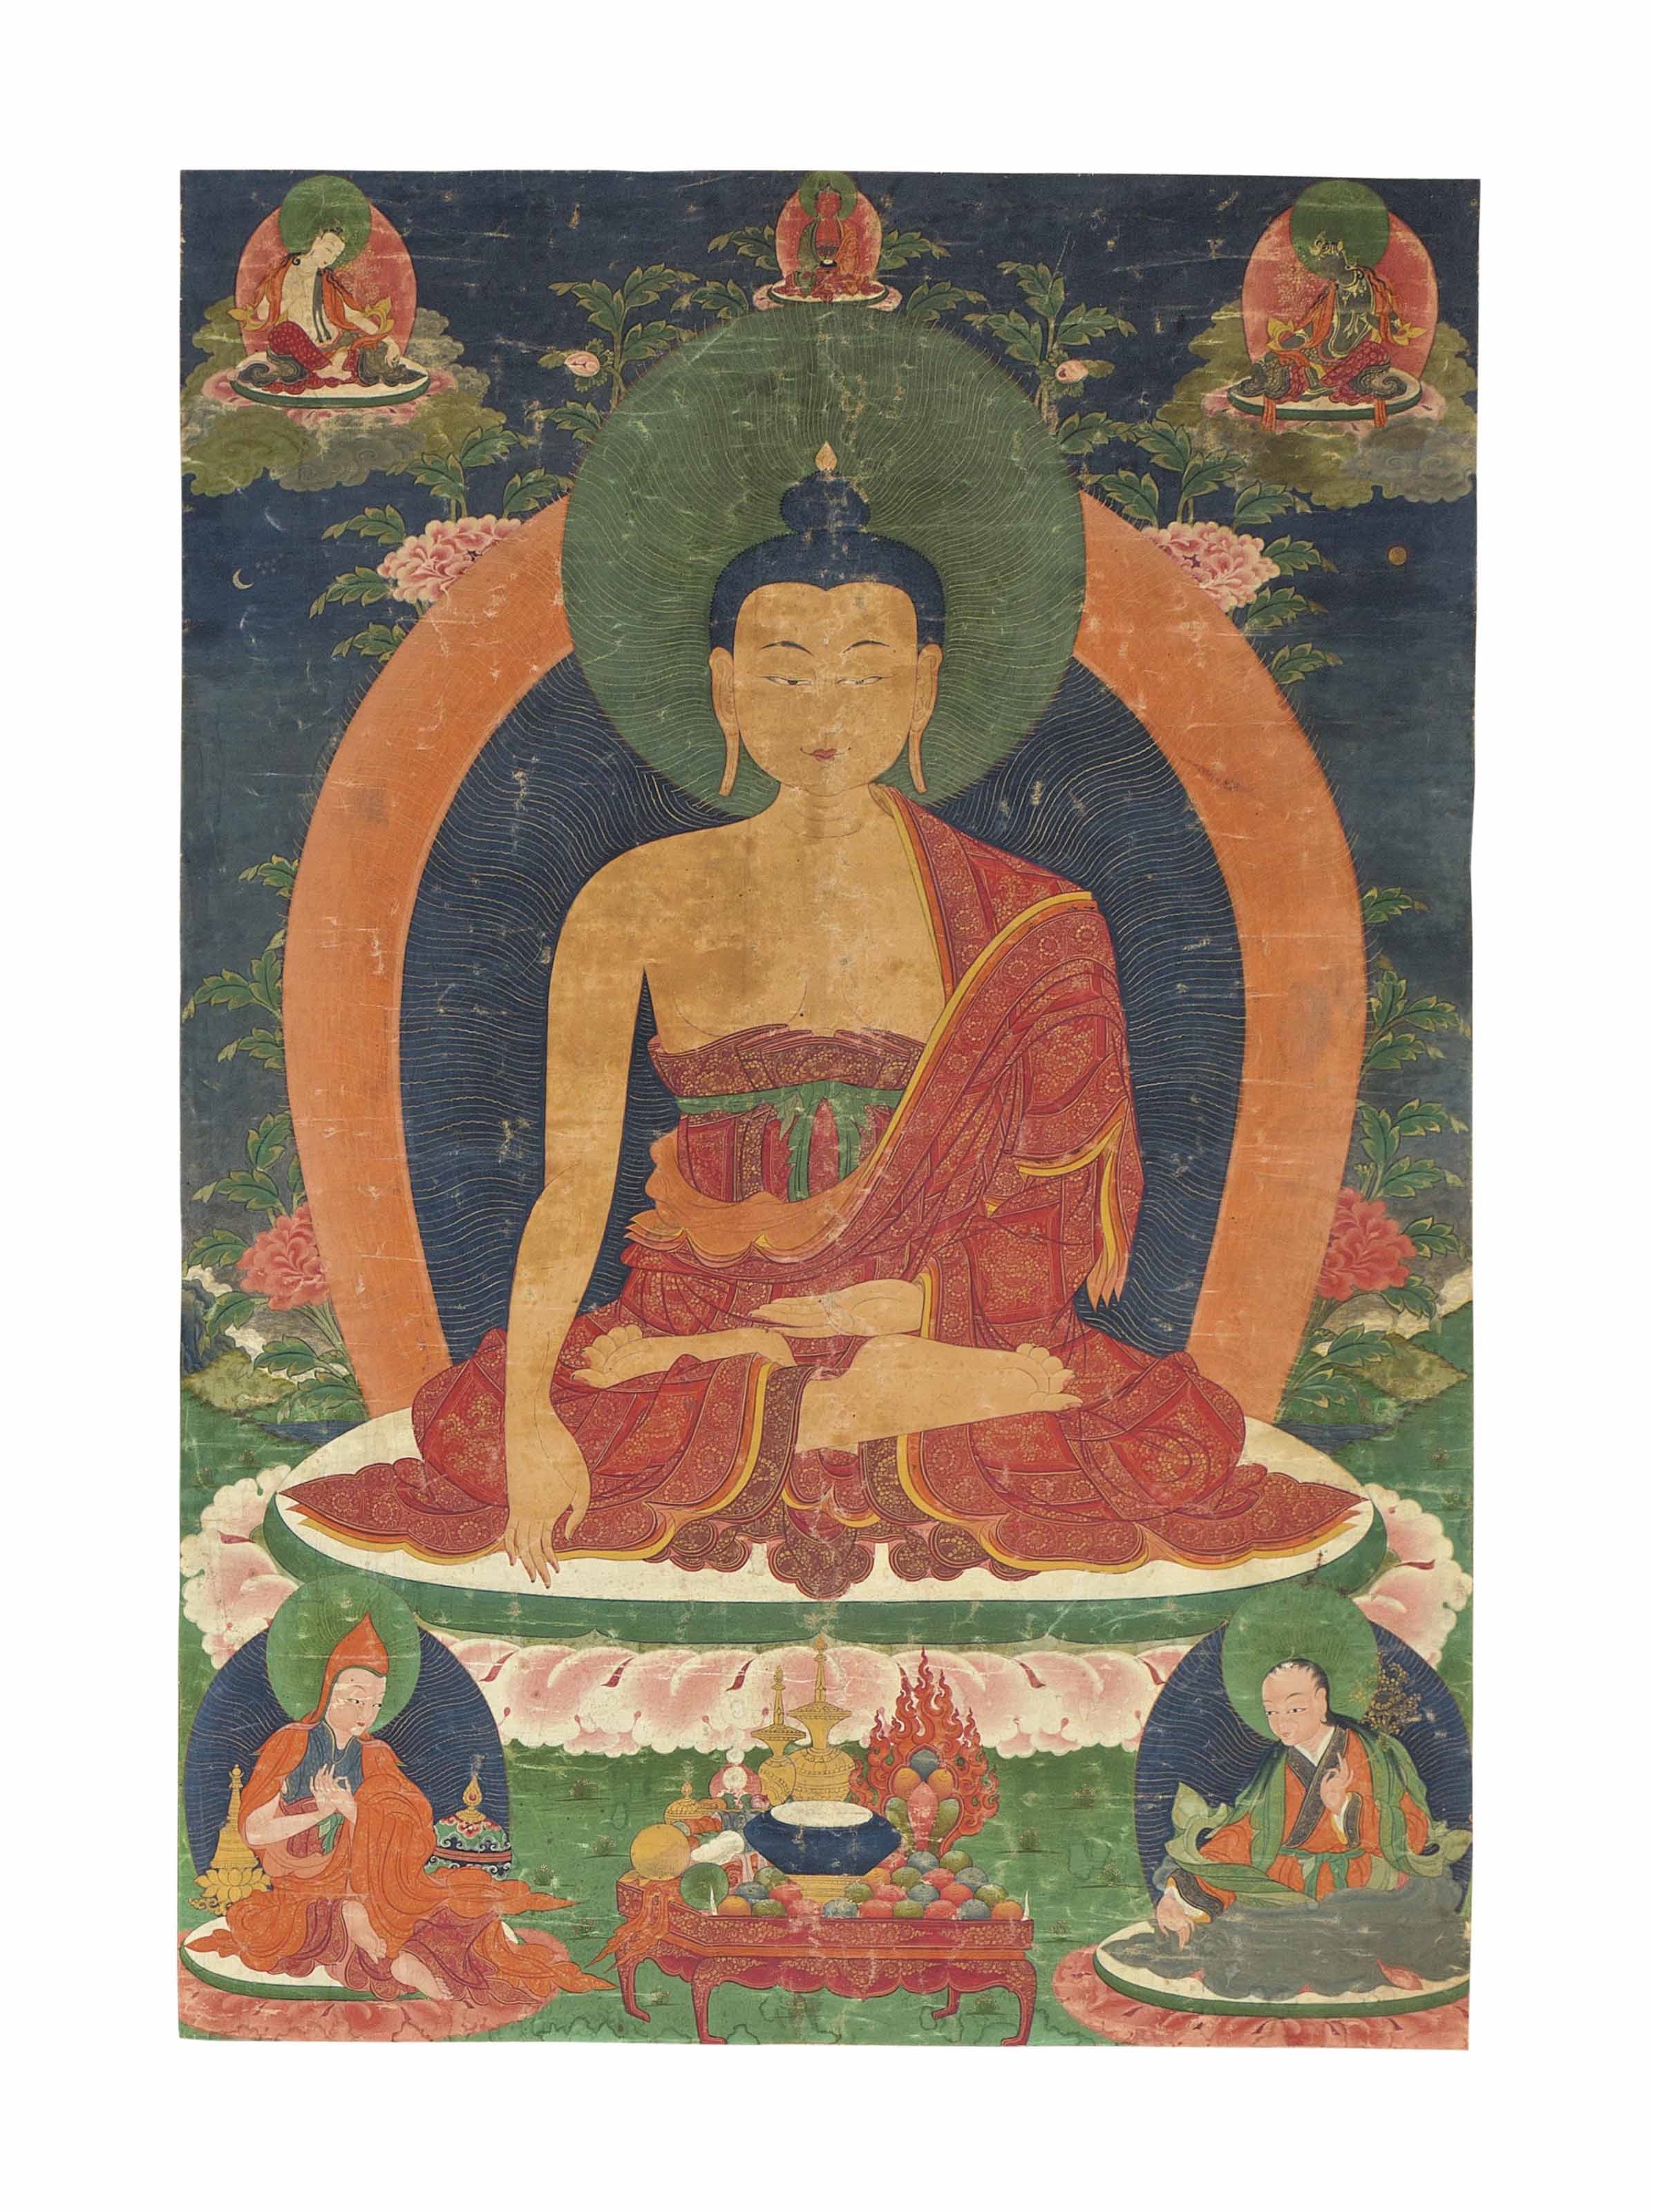 A painting of Shakyamuni Buddha by Tibetan School, 18th Century, 18th century